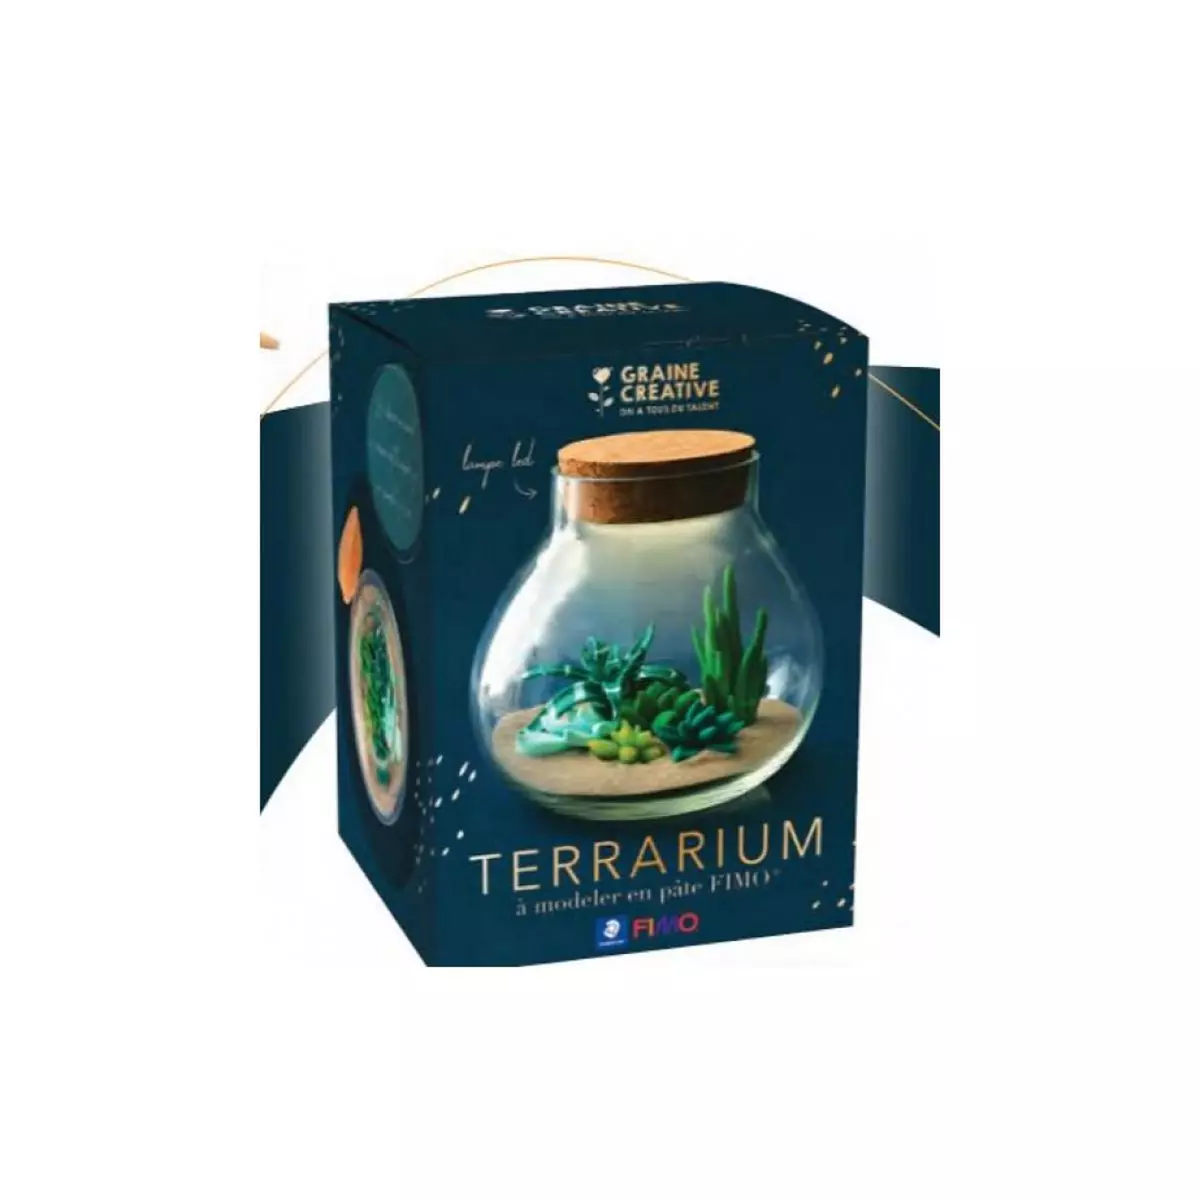 Fimo Kit  Terrarium LED Graine creative